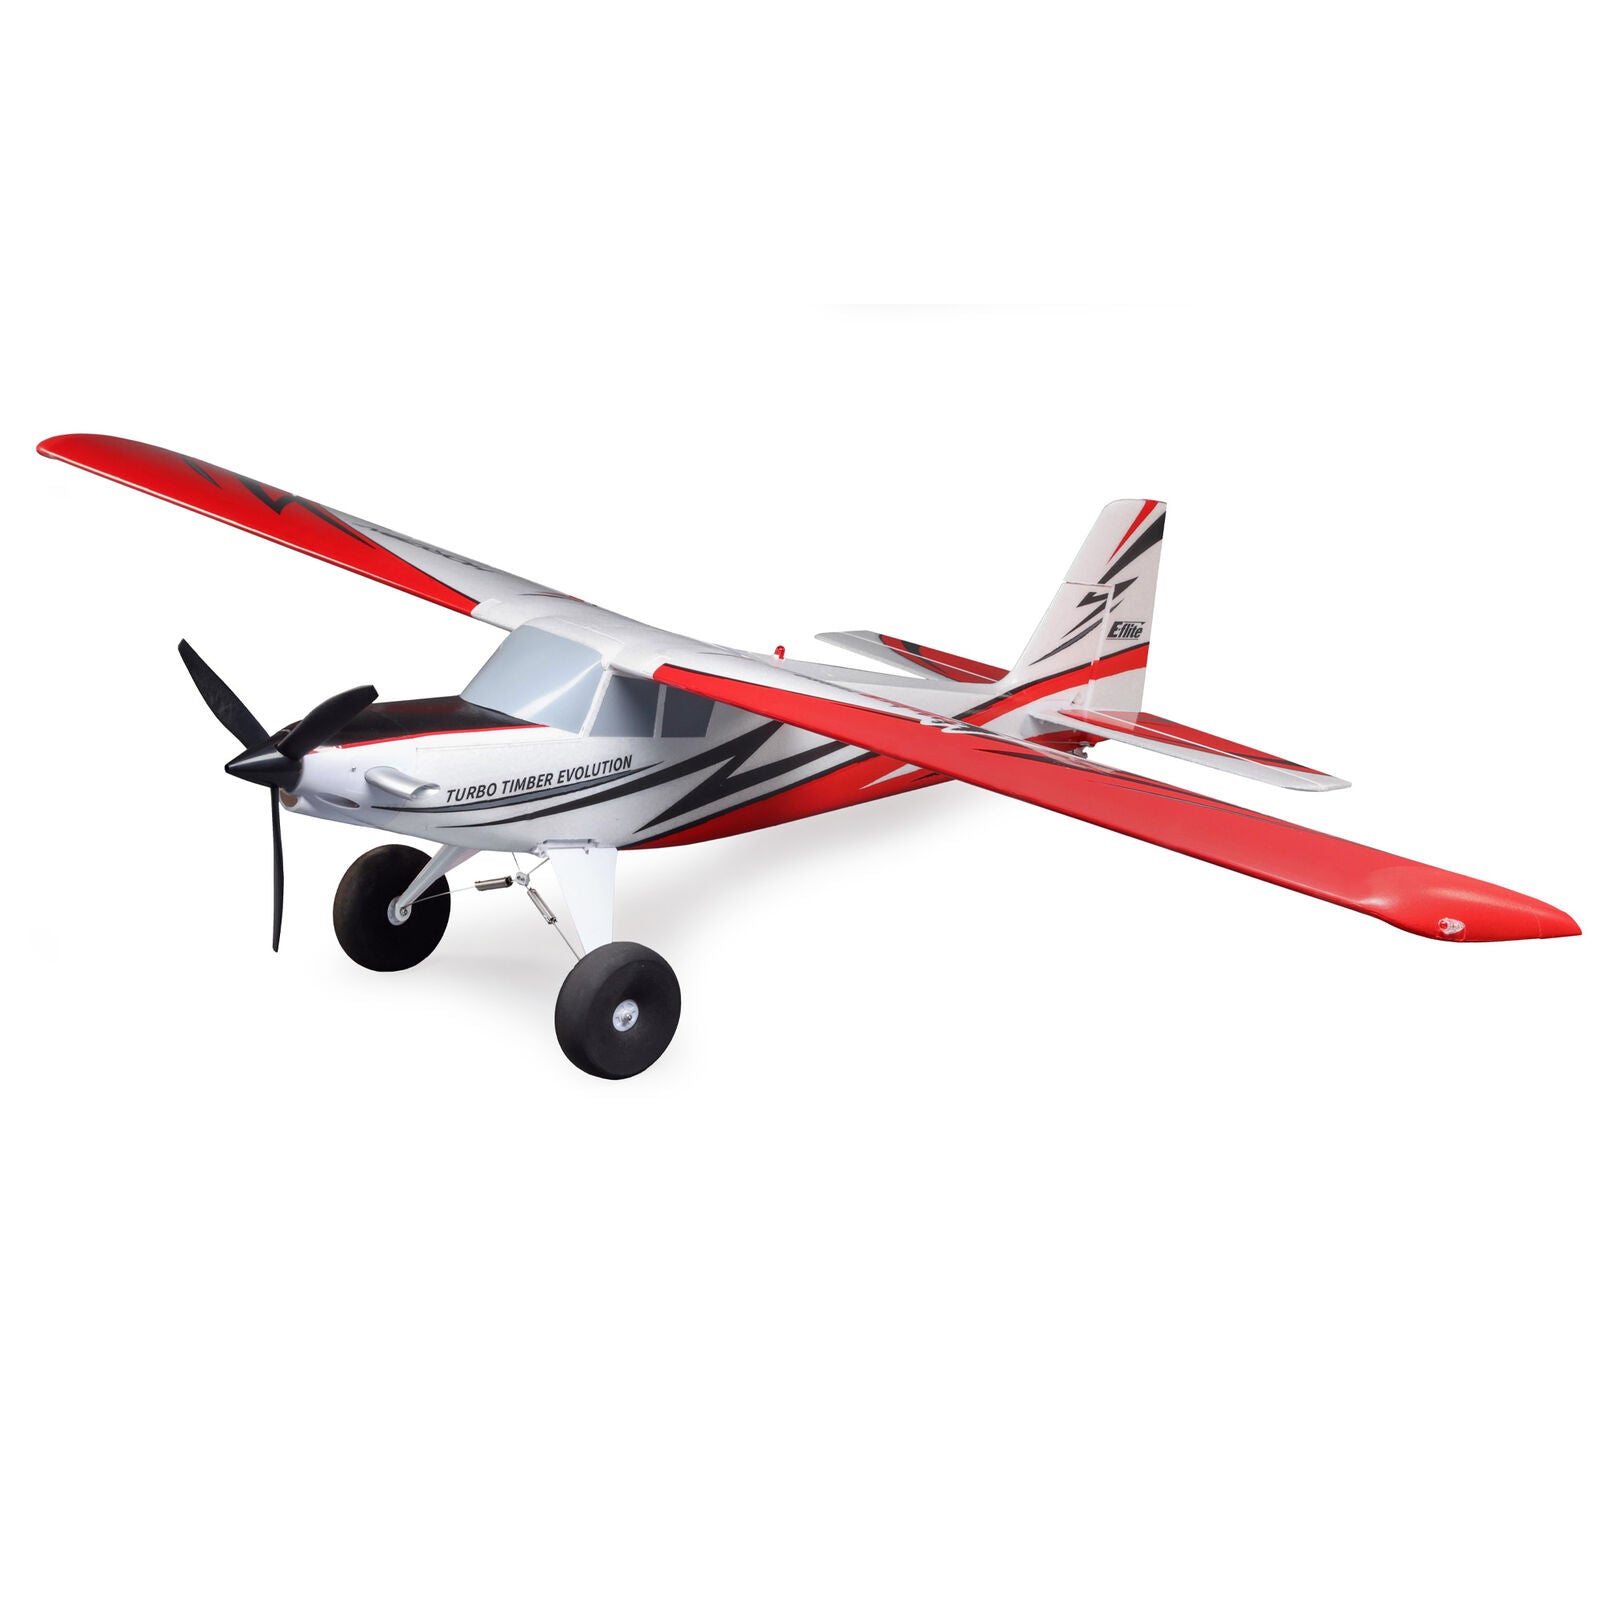 EFLITE EFL105250 Turbo Timber Evolution 1.5m Bind-N-Fly Basic Electric Airplane (1549mm) w/Smart ESC BNF